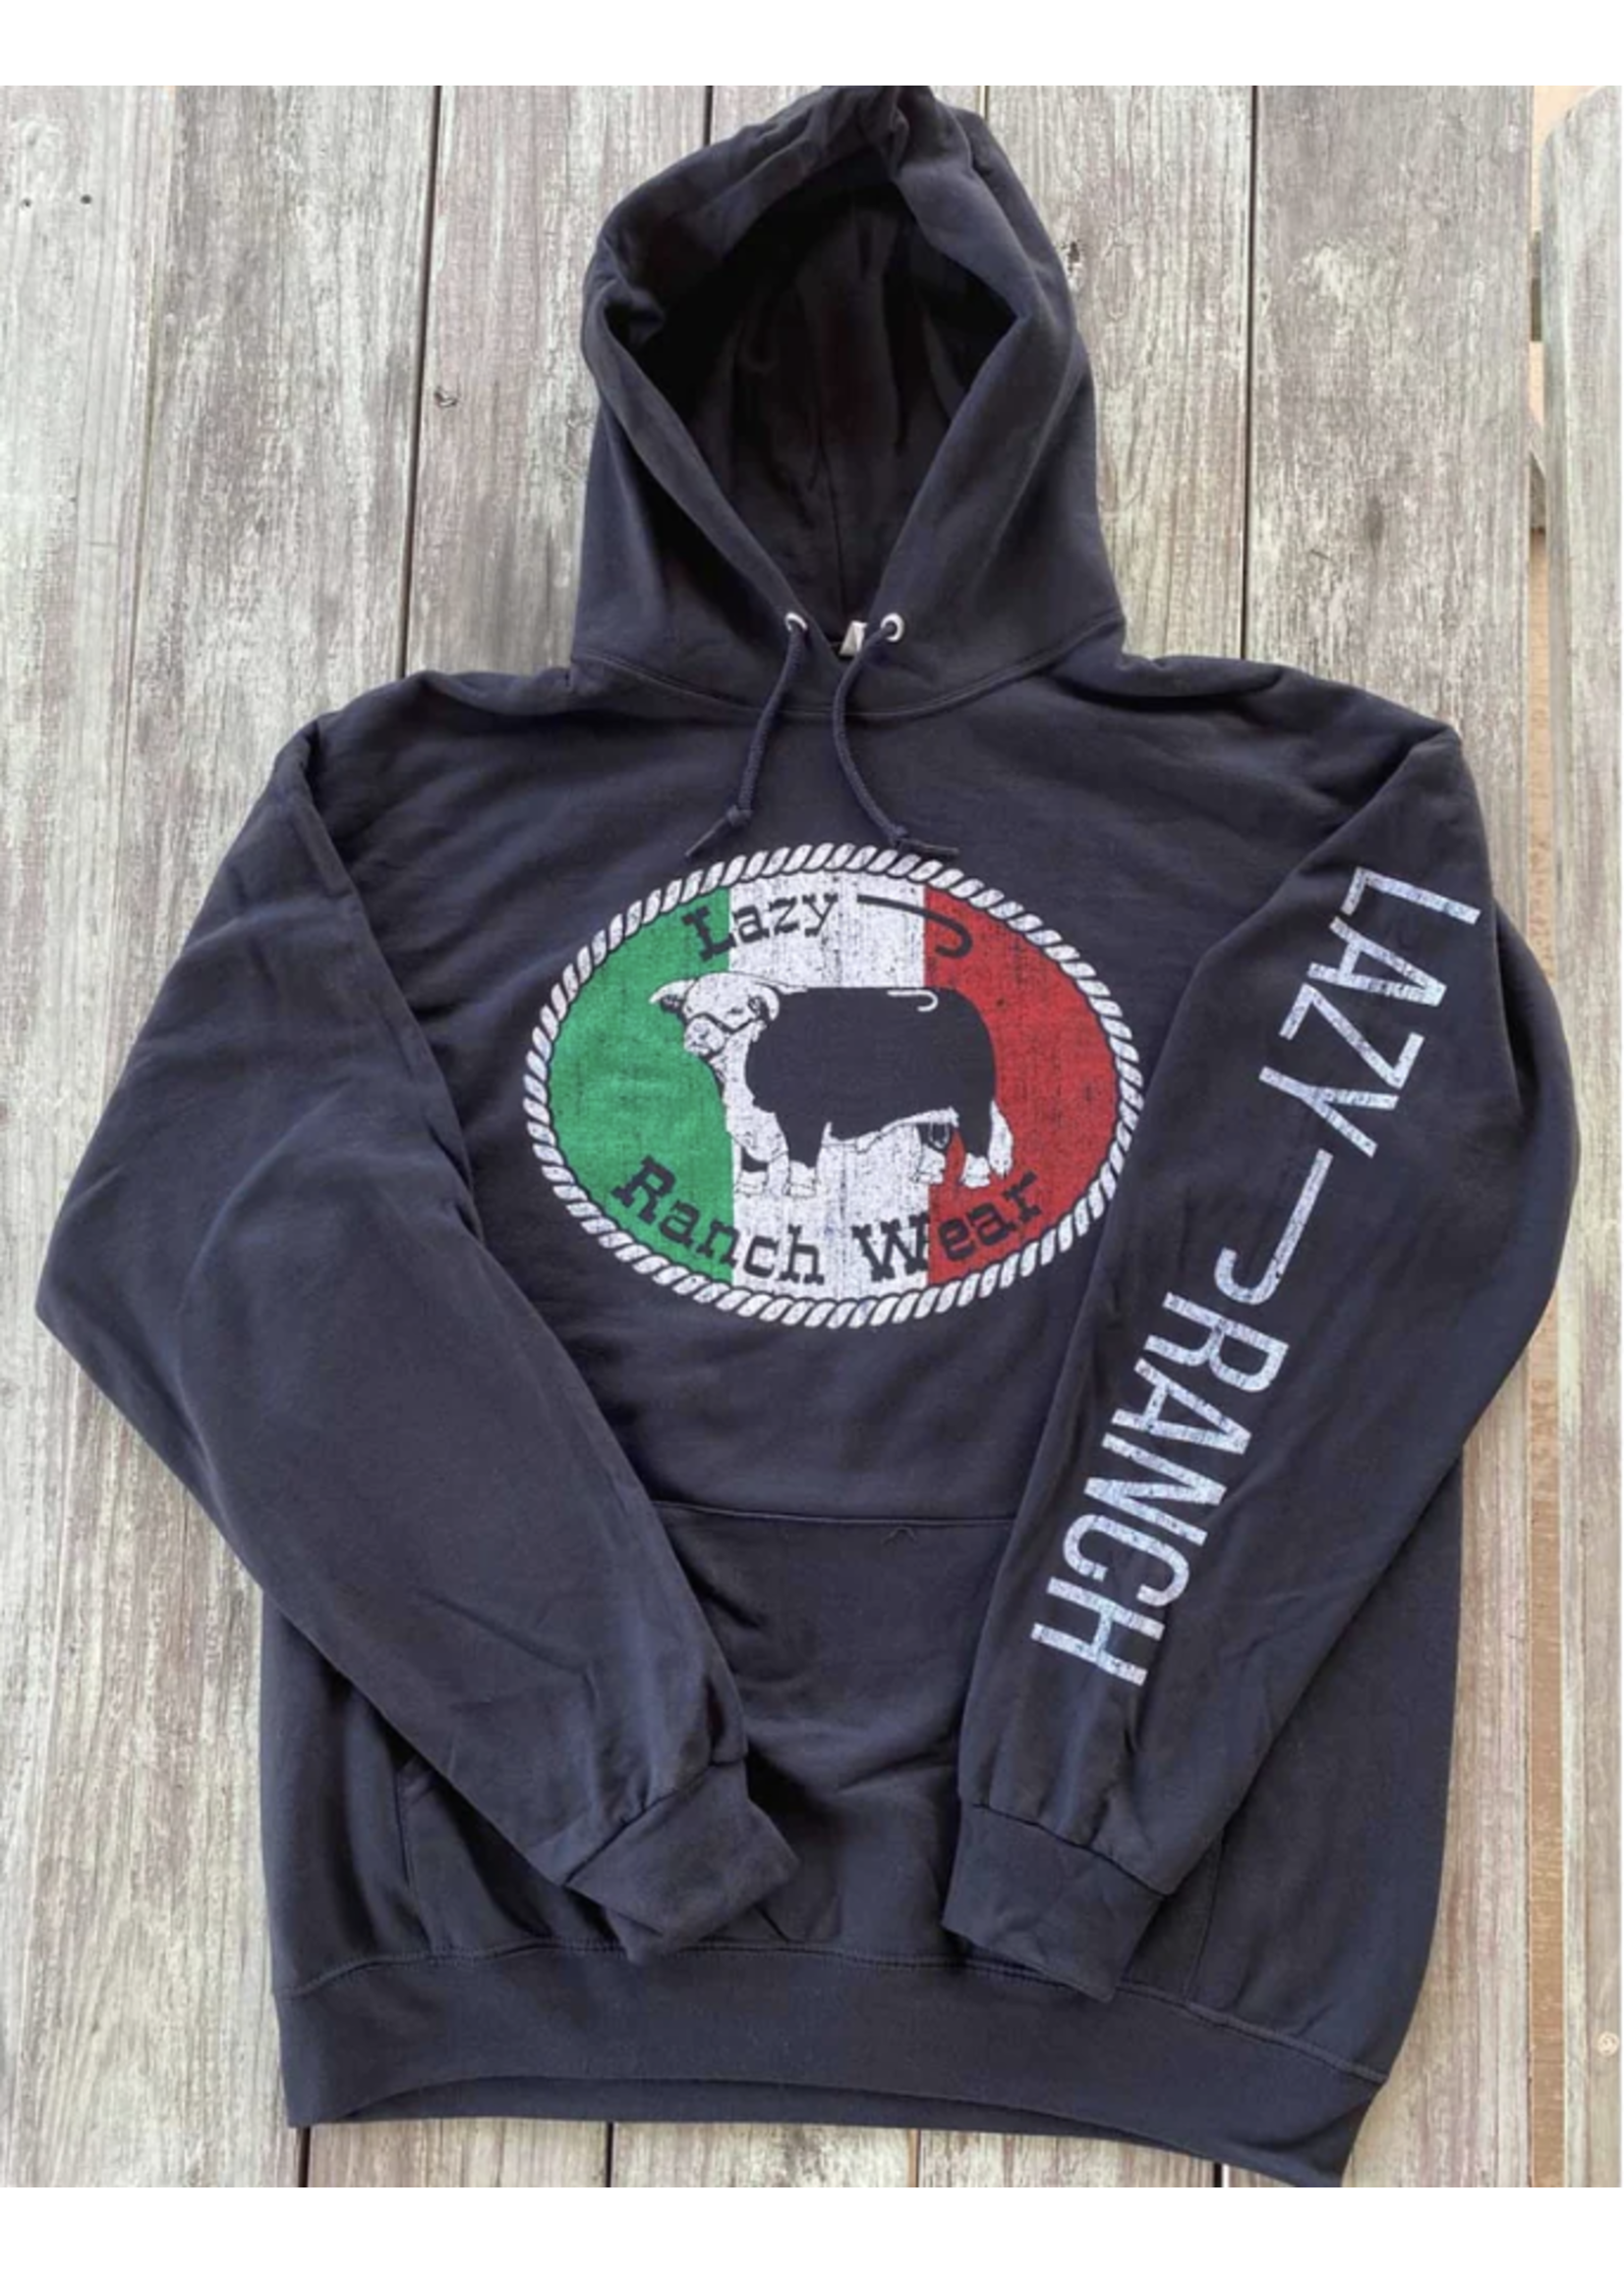 Lazy J Ranch Wear Original Buckle Mexico Elevation Hoodie - Black